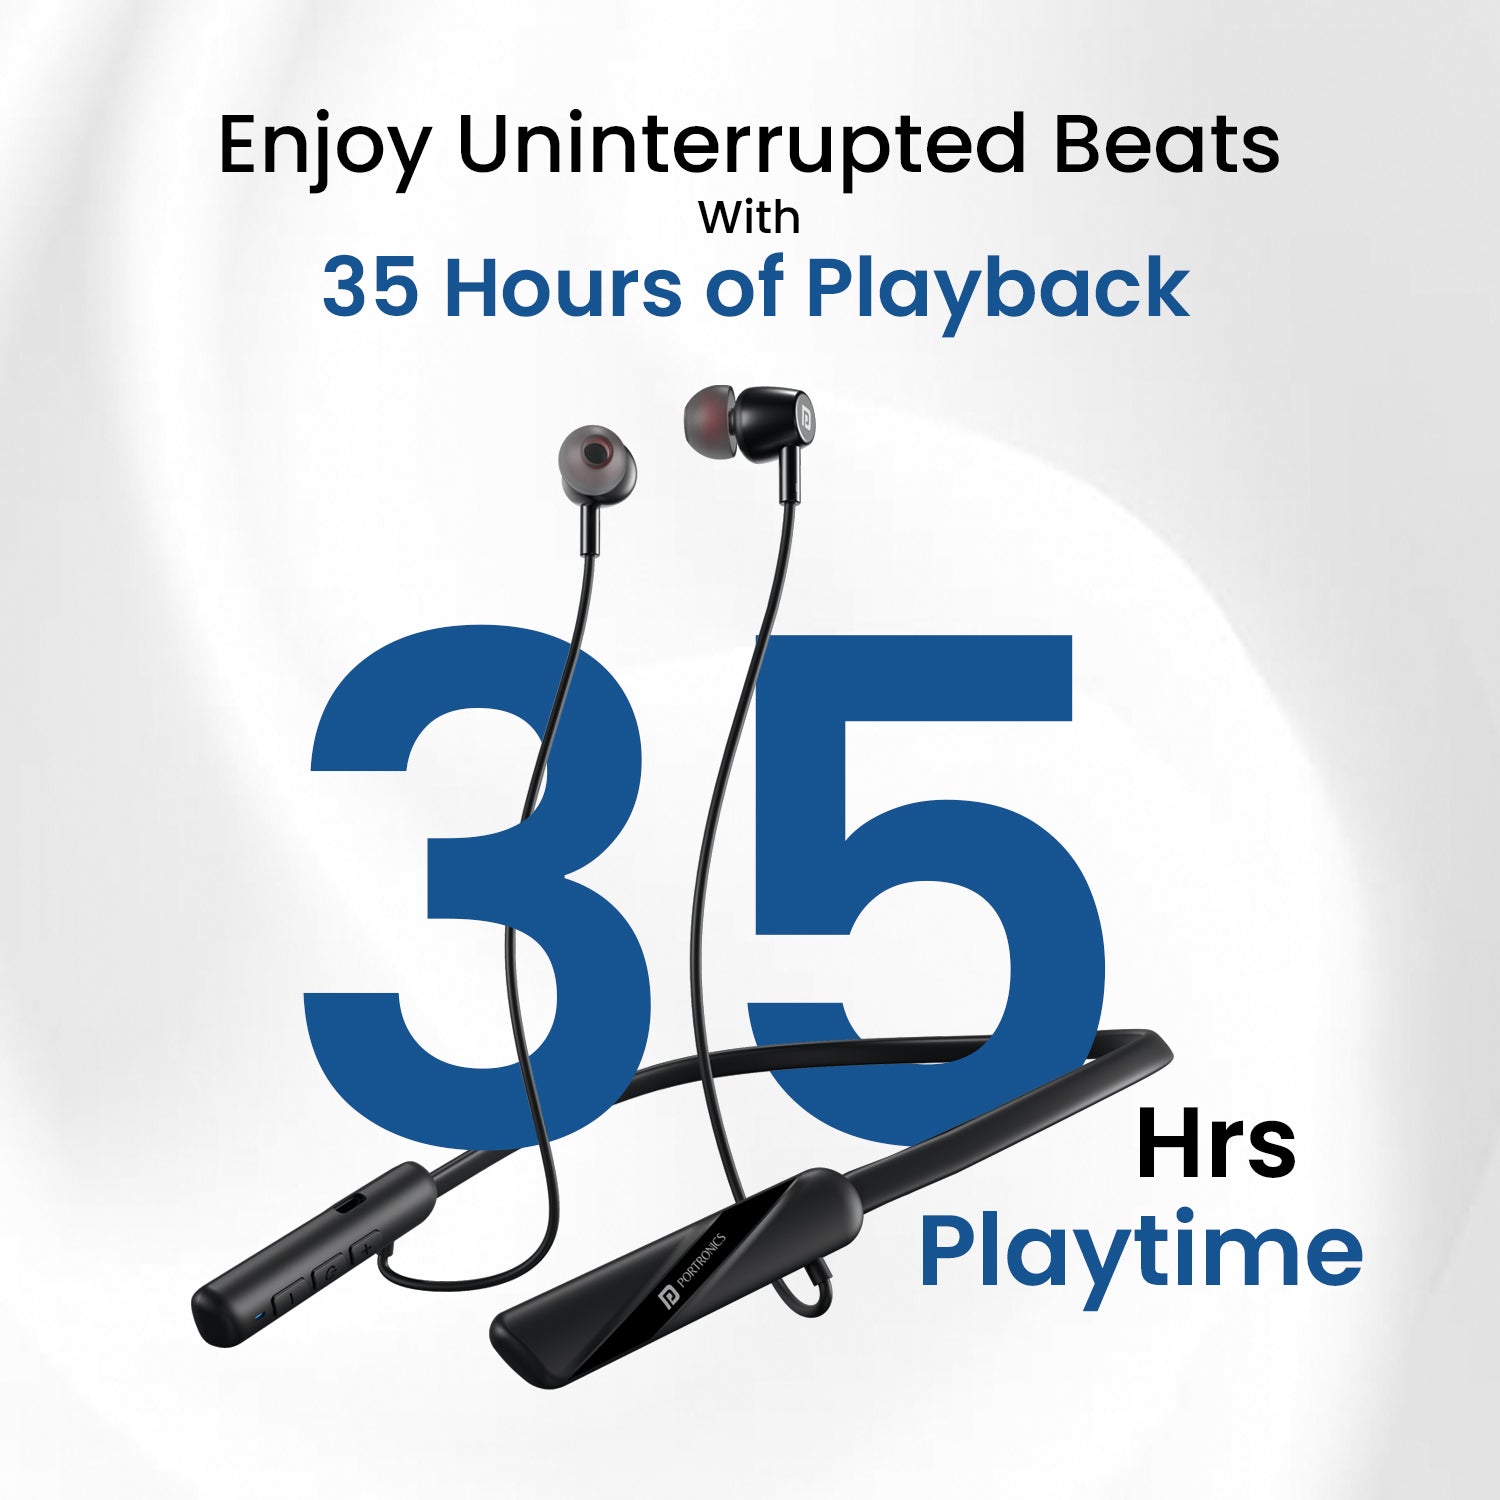 Black Portronics Harmonics Z10 wireless neckband eaarphones has 35hr playtime to enjoy your music uninterrupted